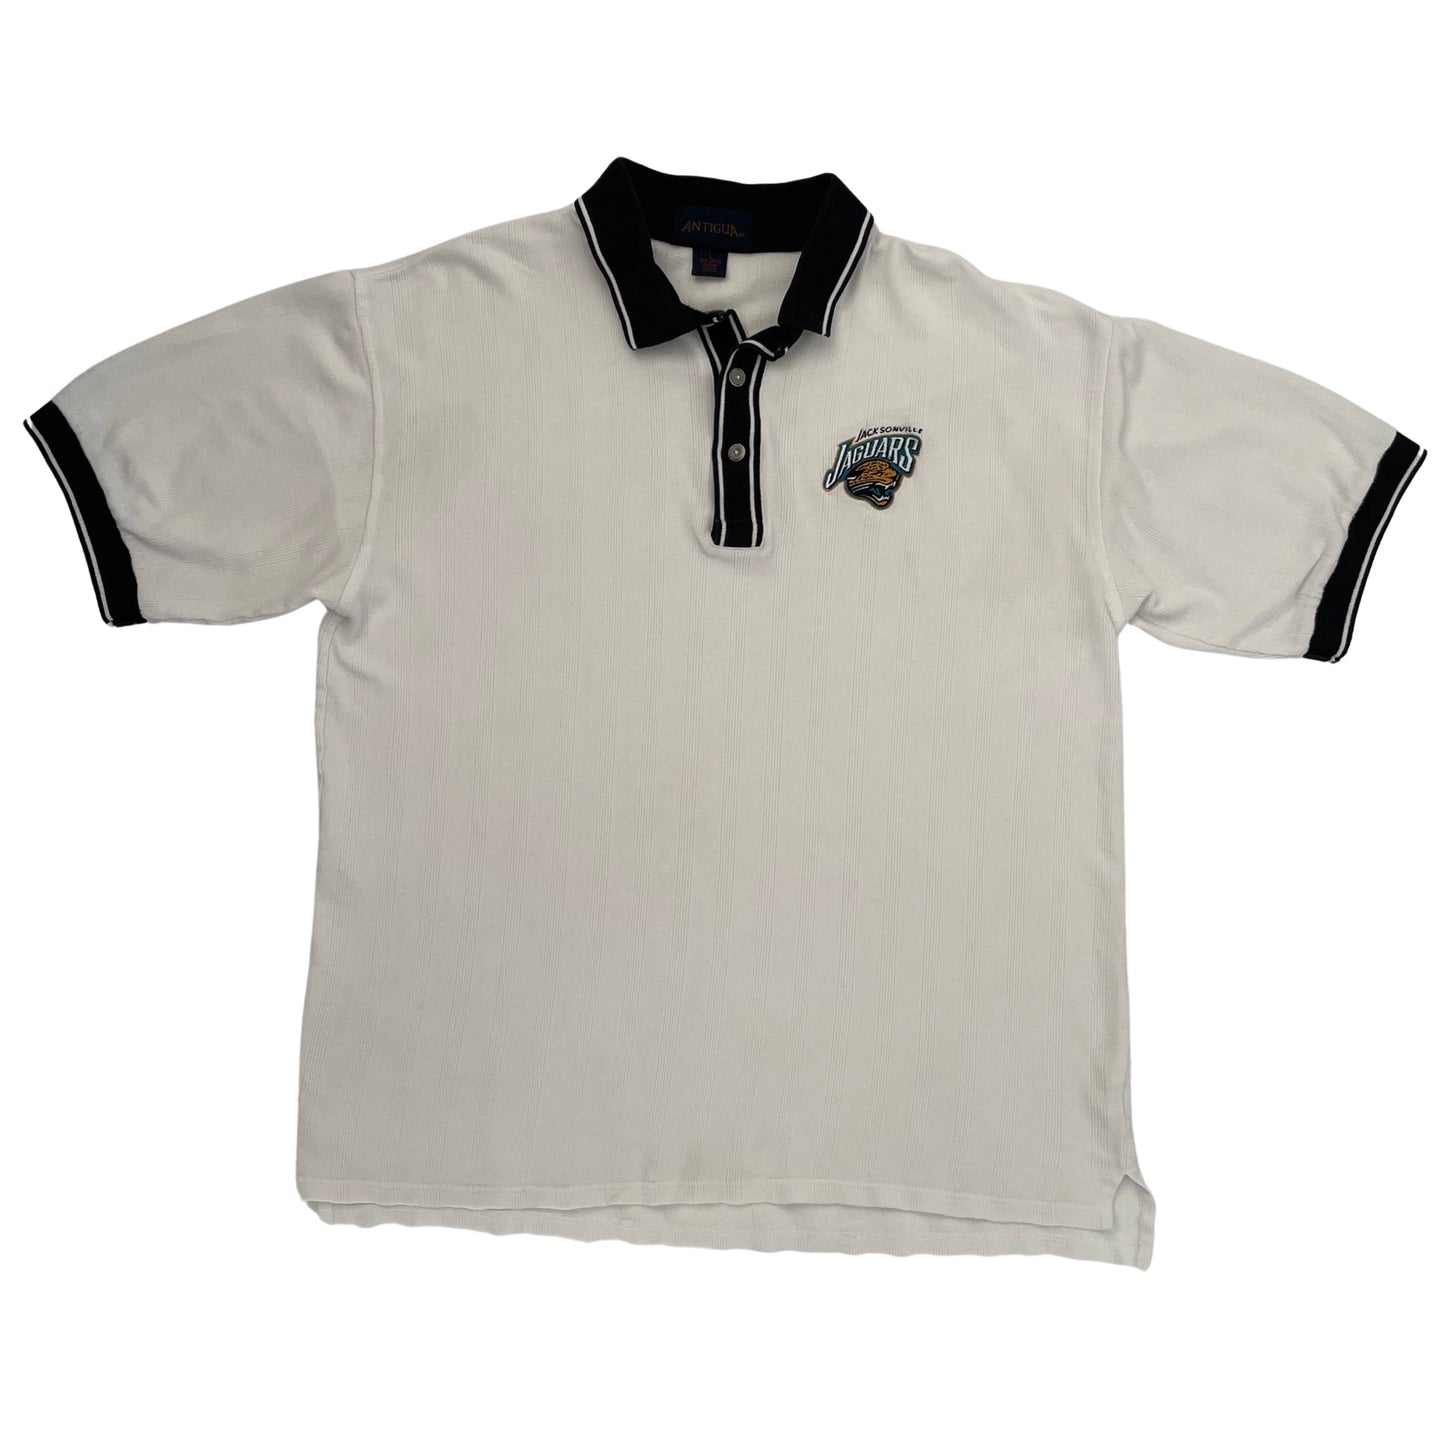 Vintage Jacksonville Jaguars polo shirt size LARGE